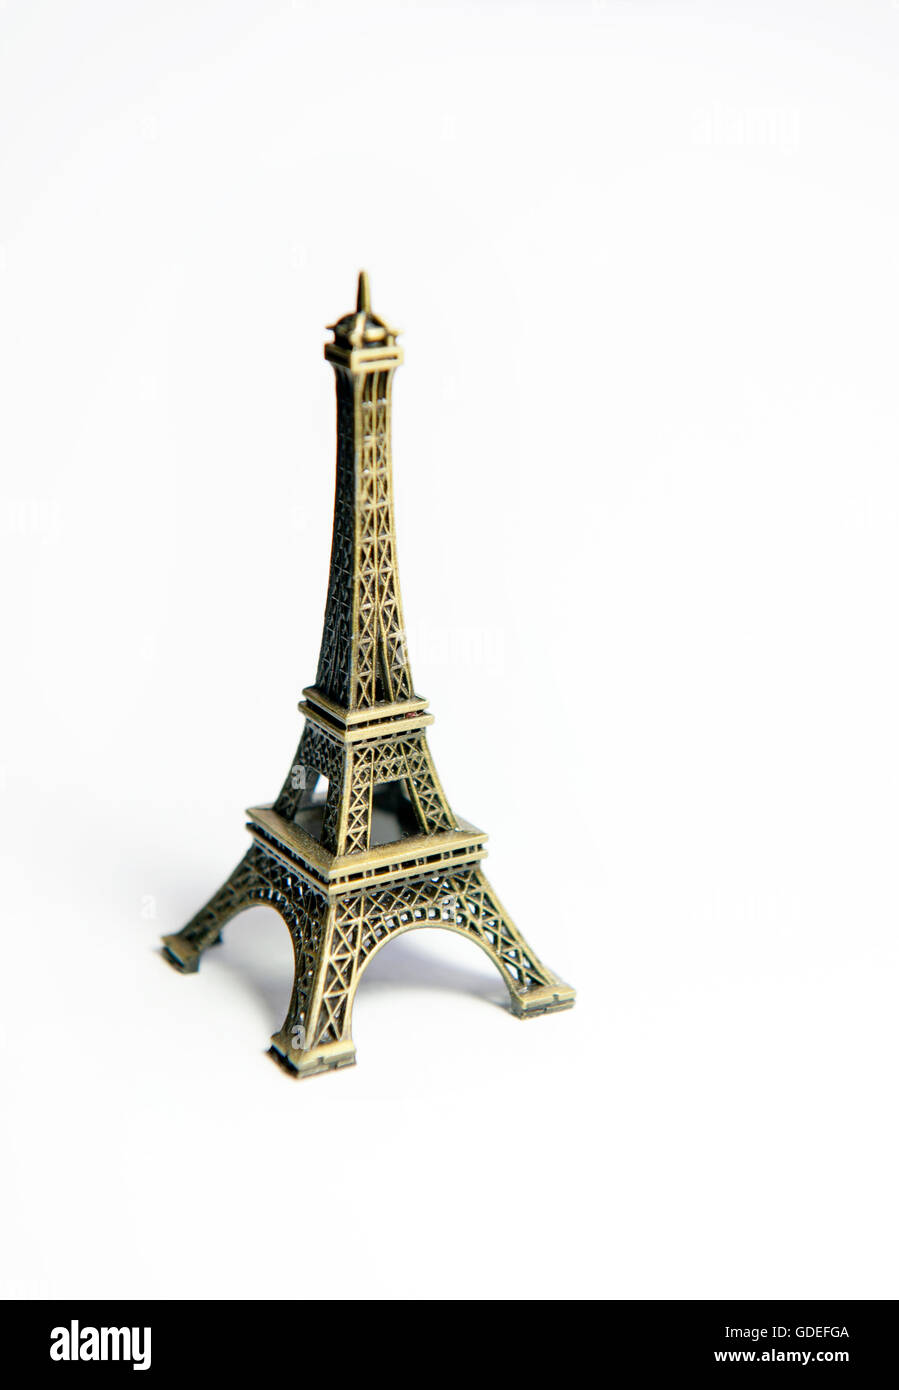 Black Eiffel Tower Statue. Large Paris Eiffel Tower Figurine